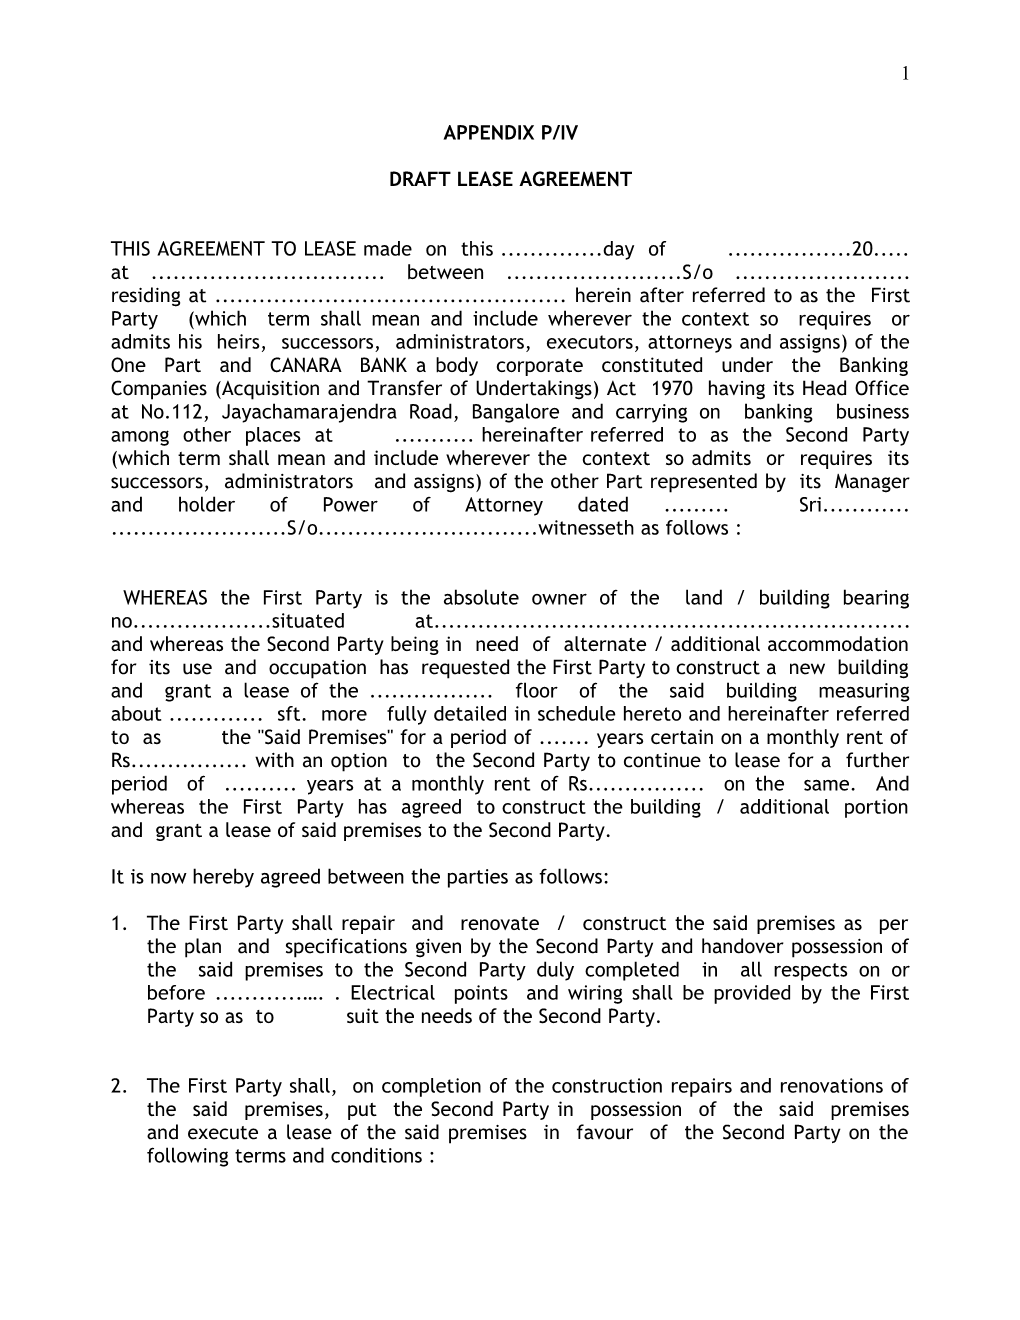 Draft Lease Agreement - Blank Format 680 0 6 0060 17J R